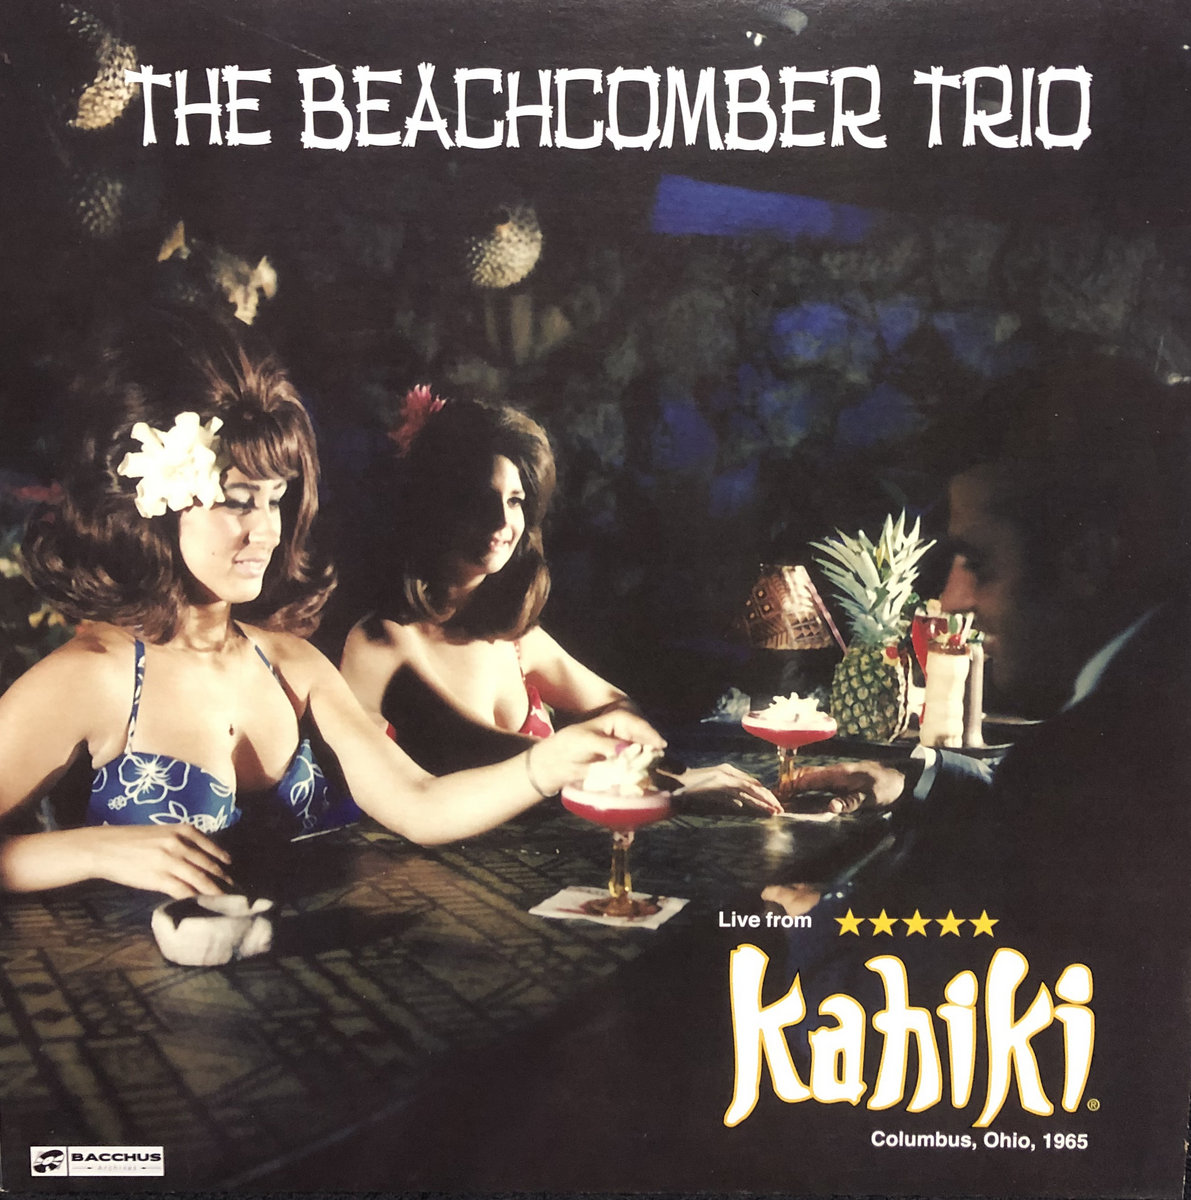 The Beachcomber Trio Live at Kahiki 1965